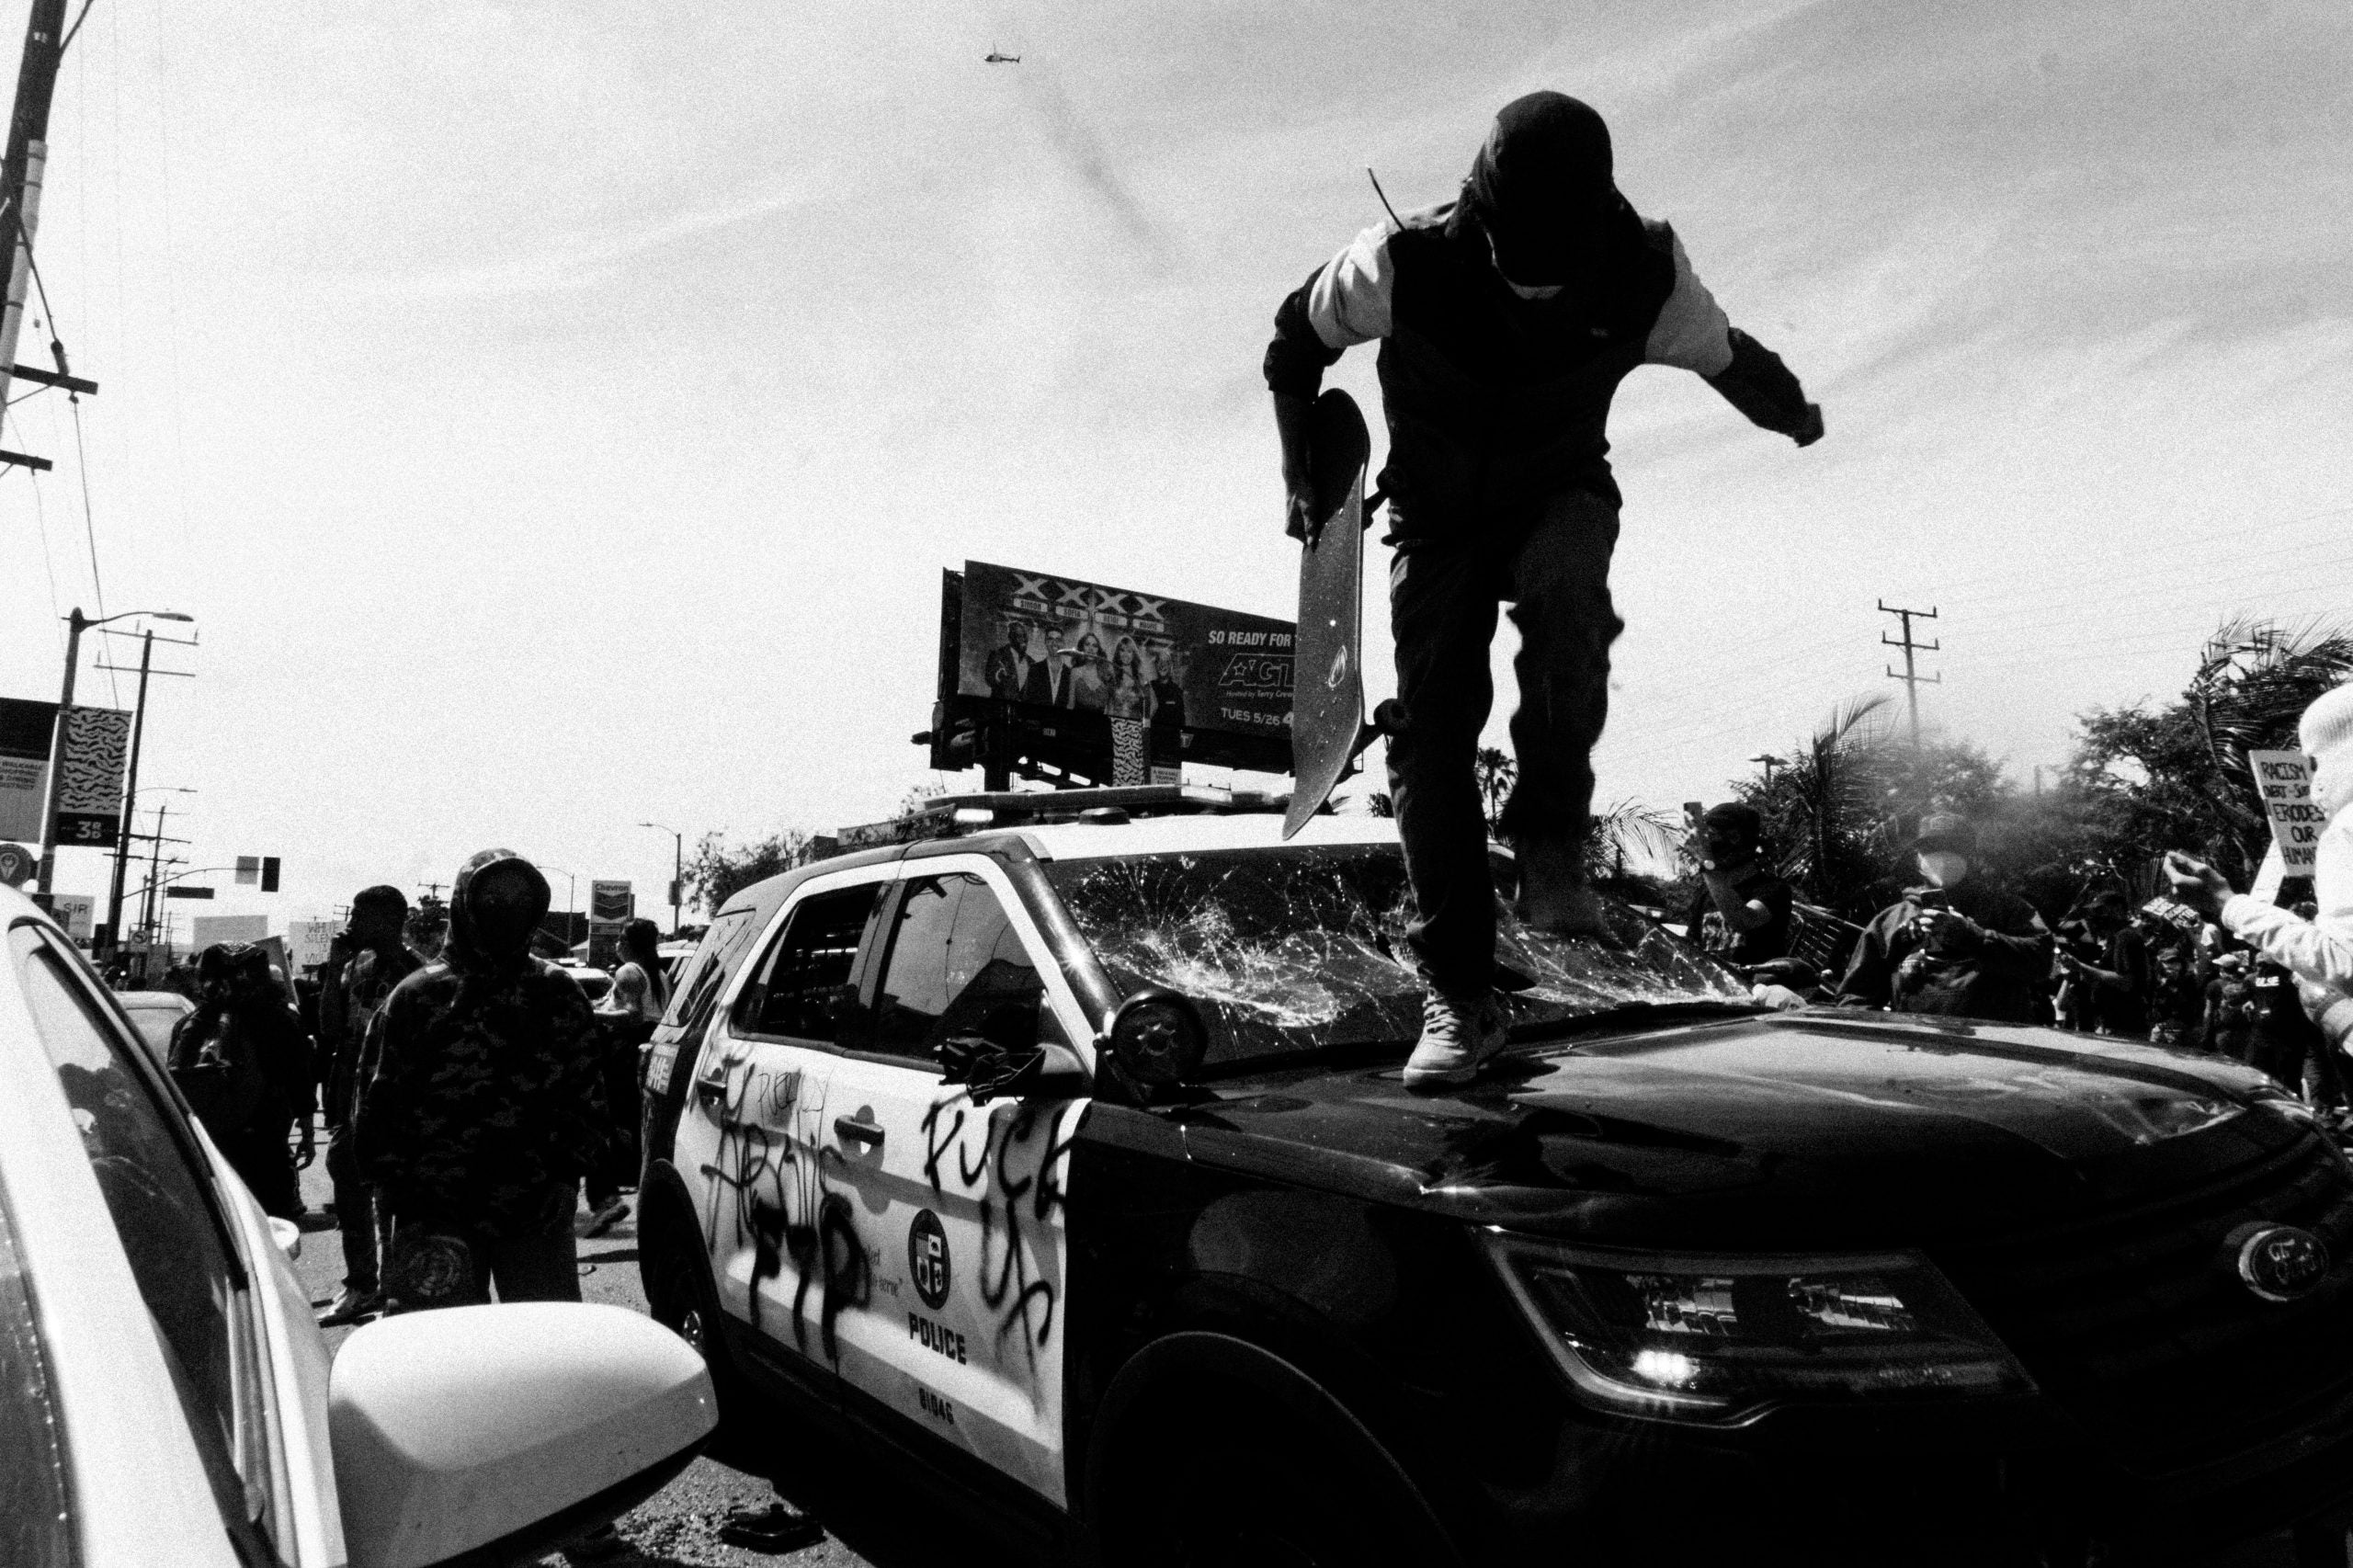 Bellamy Brewster captures West Hollywood protest